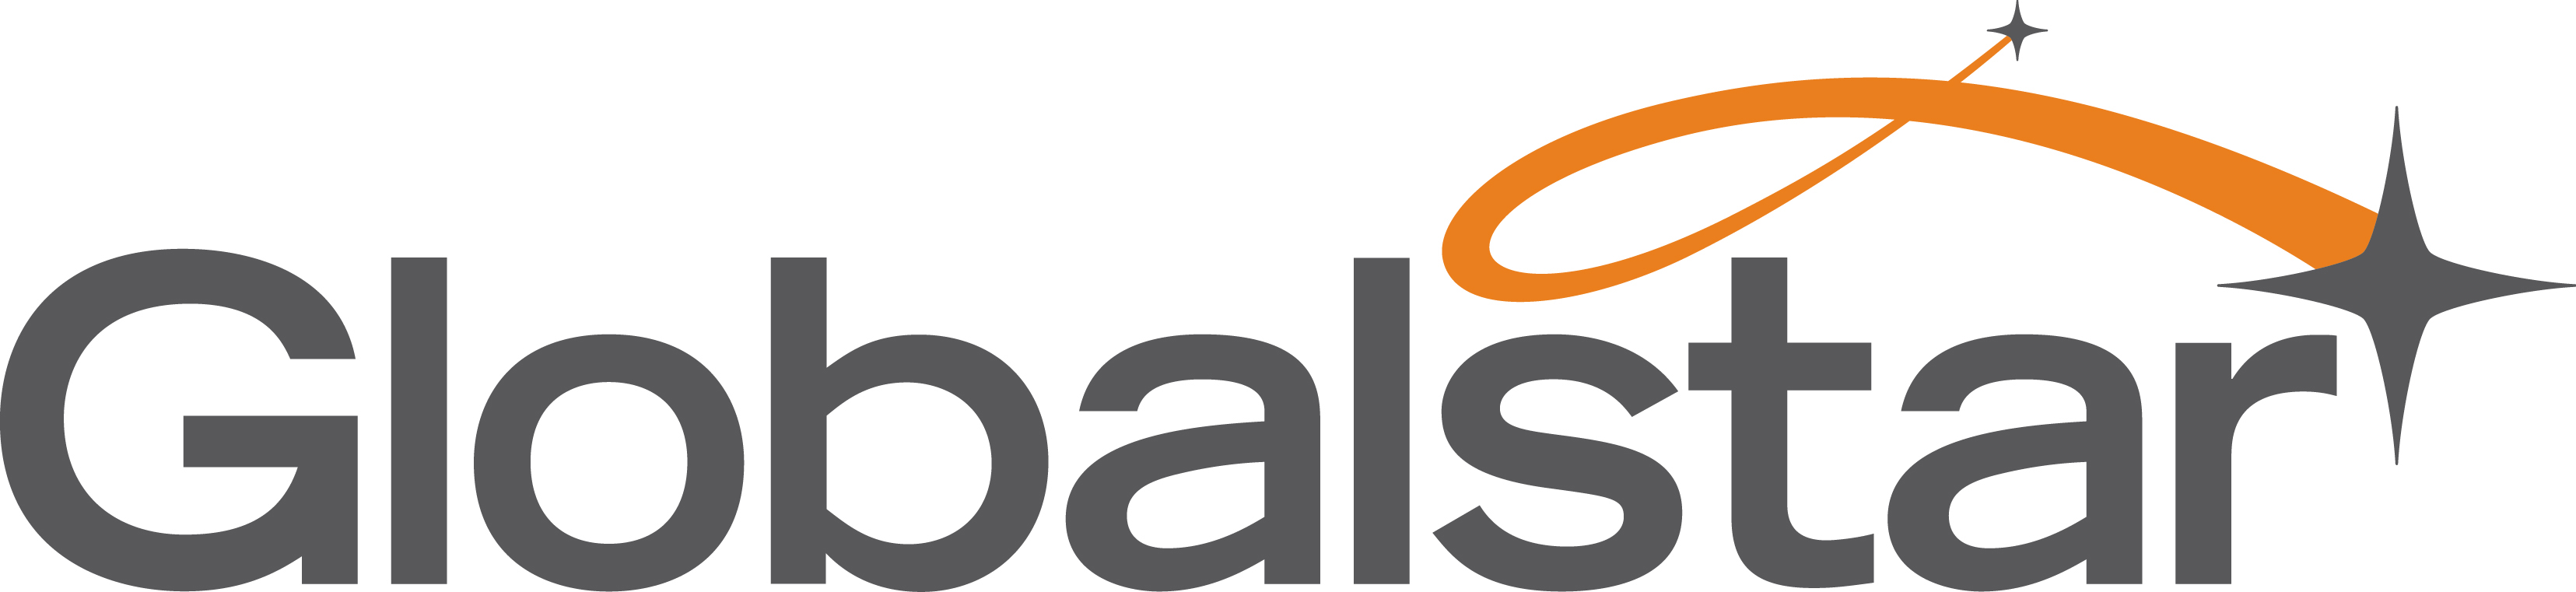 Globalstar Inc. logo